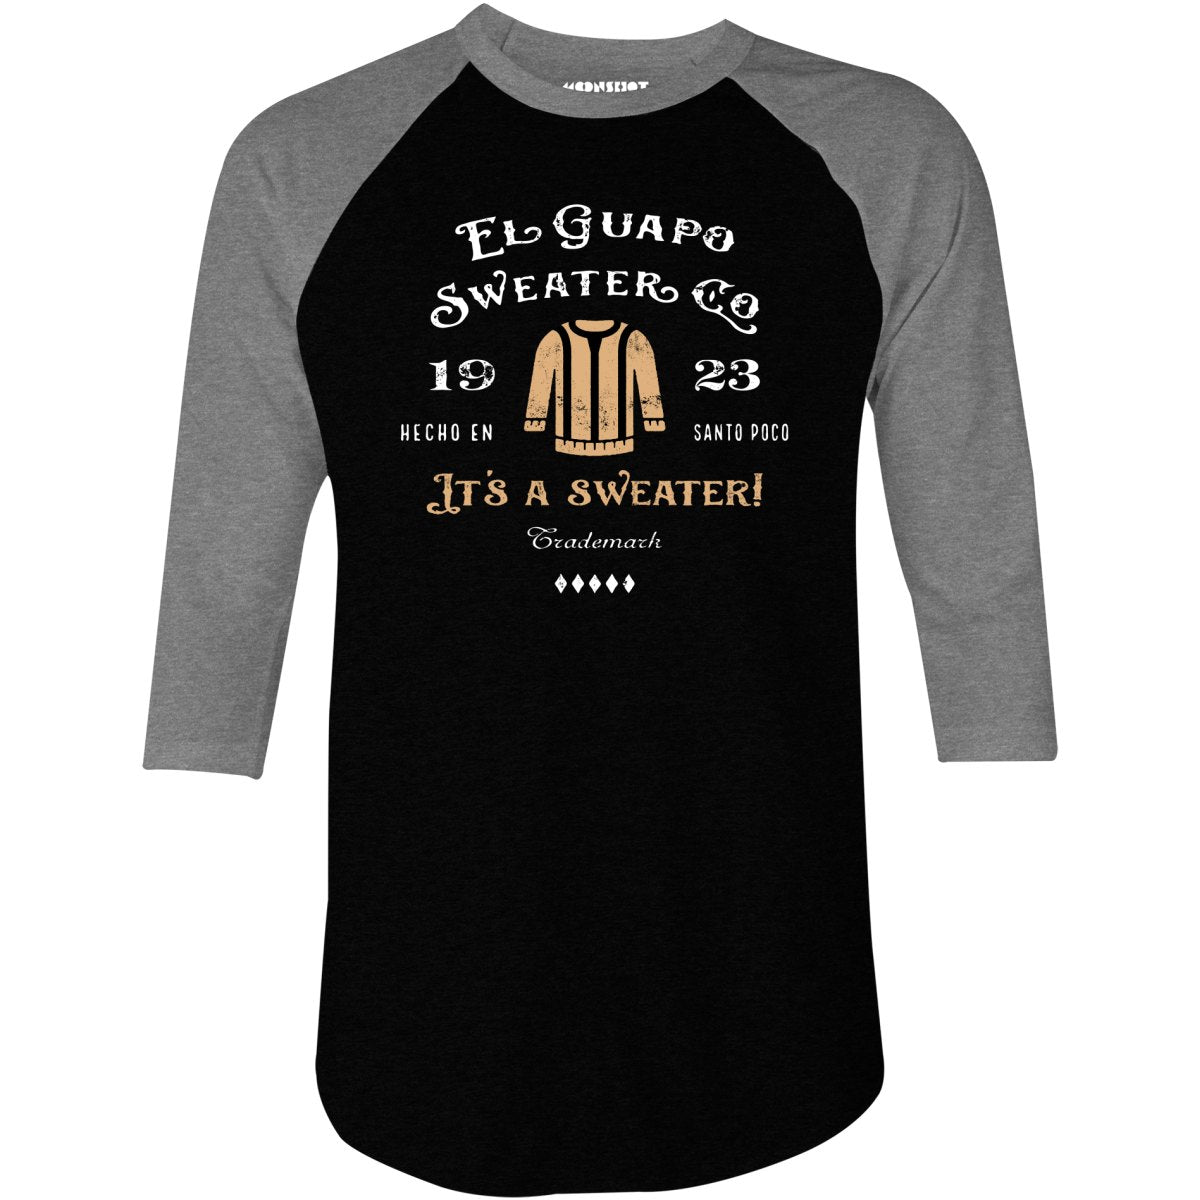 El Guapo Sweater Co. - 3/4 Sleeve Raglan T-Shirt